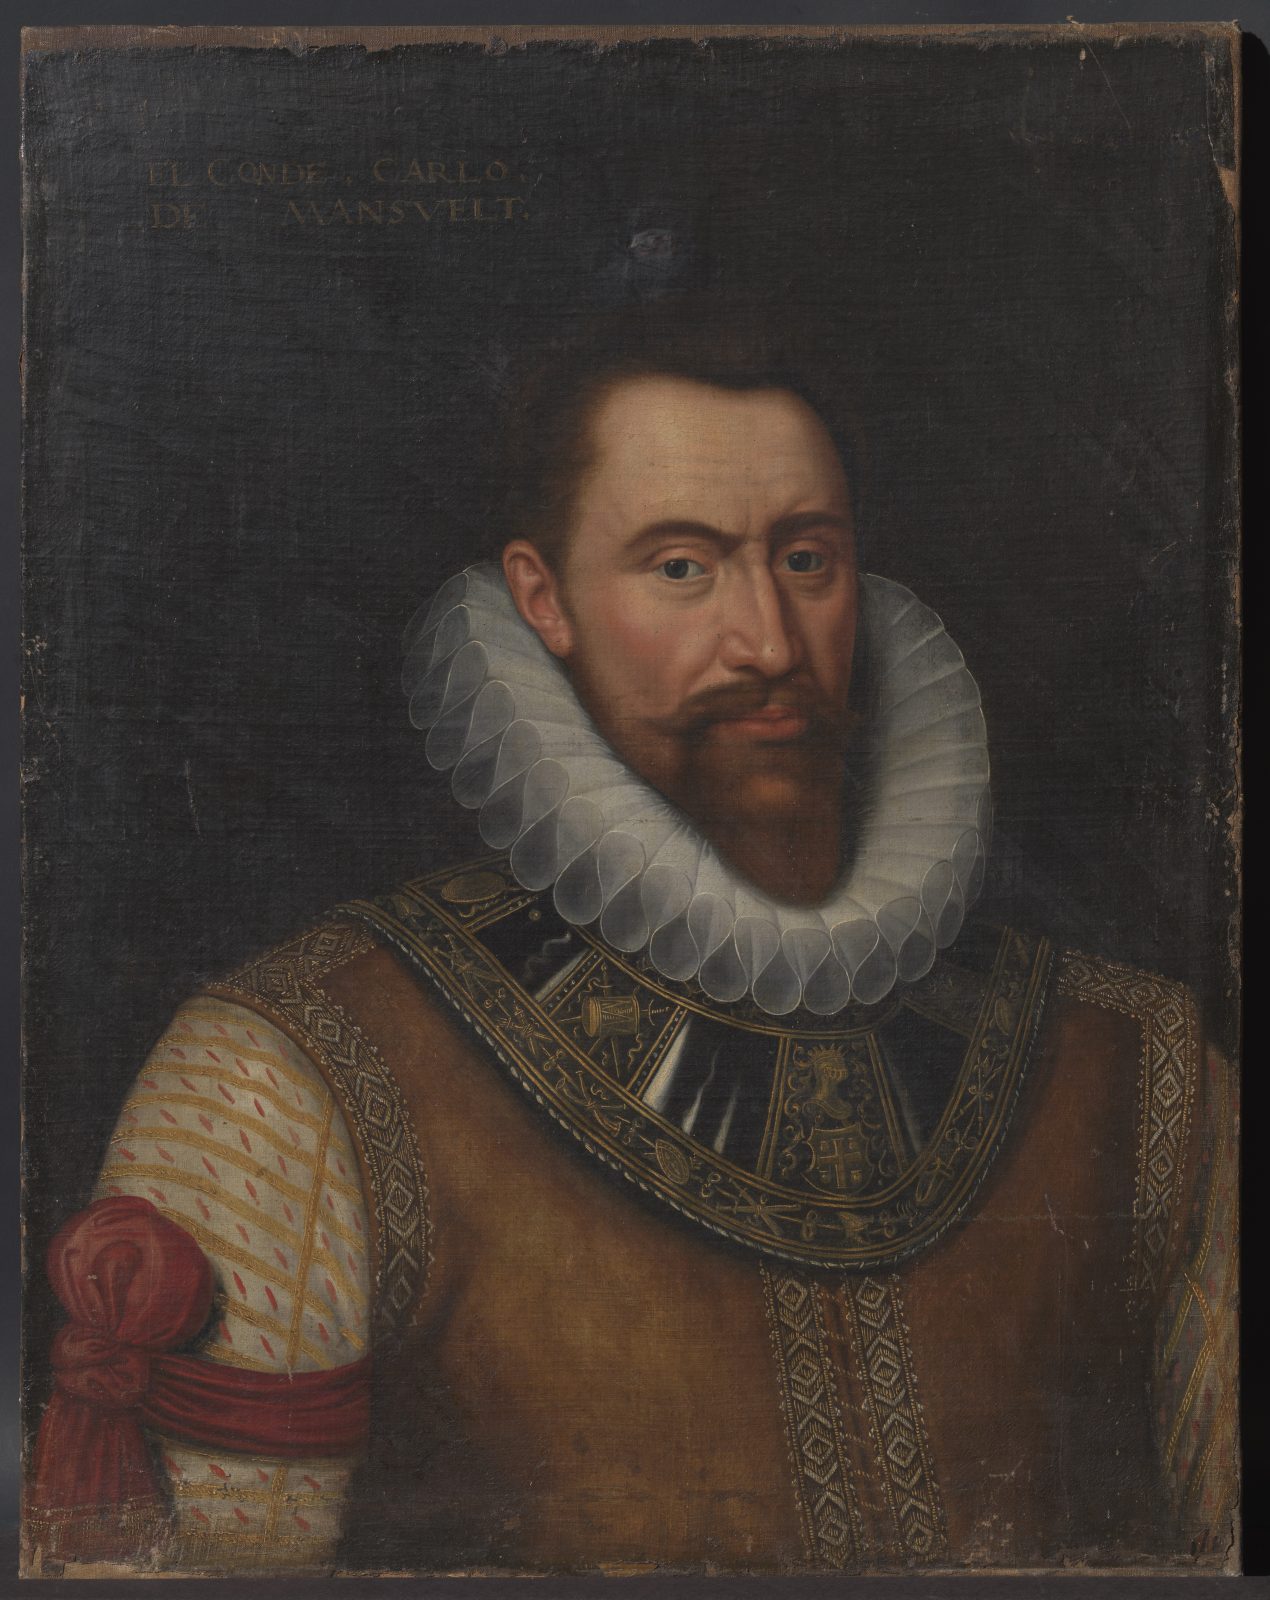 Charles de Mansfeld: life and portraits of a Renaissance prince